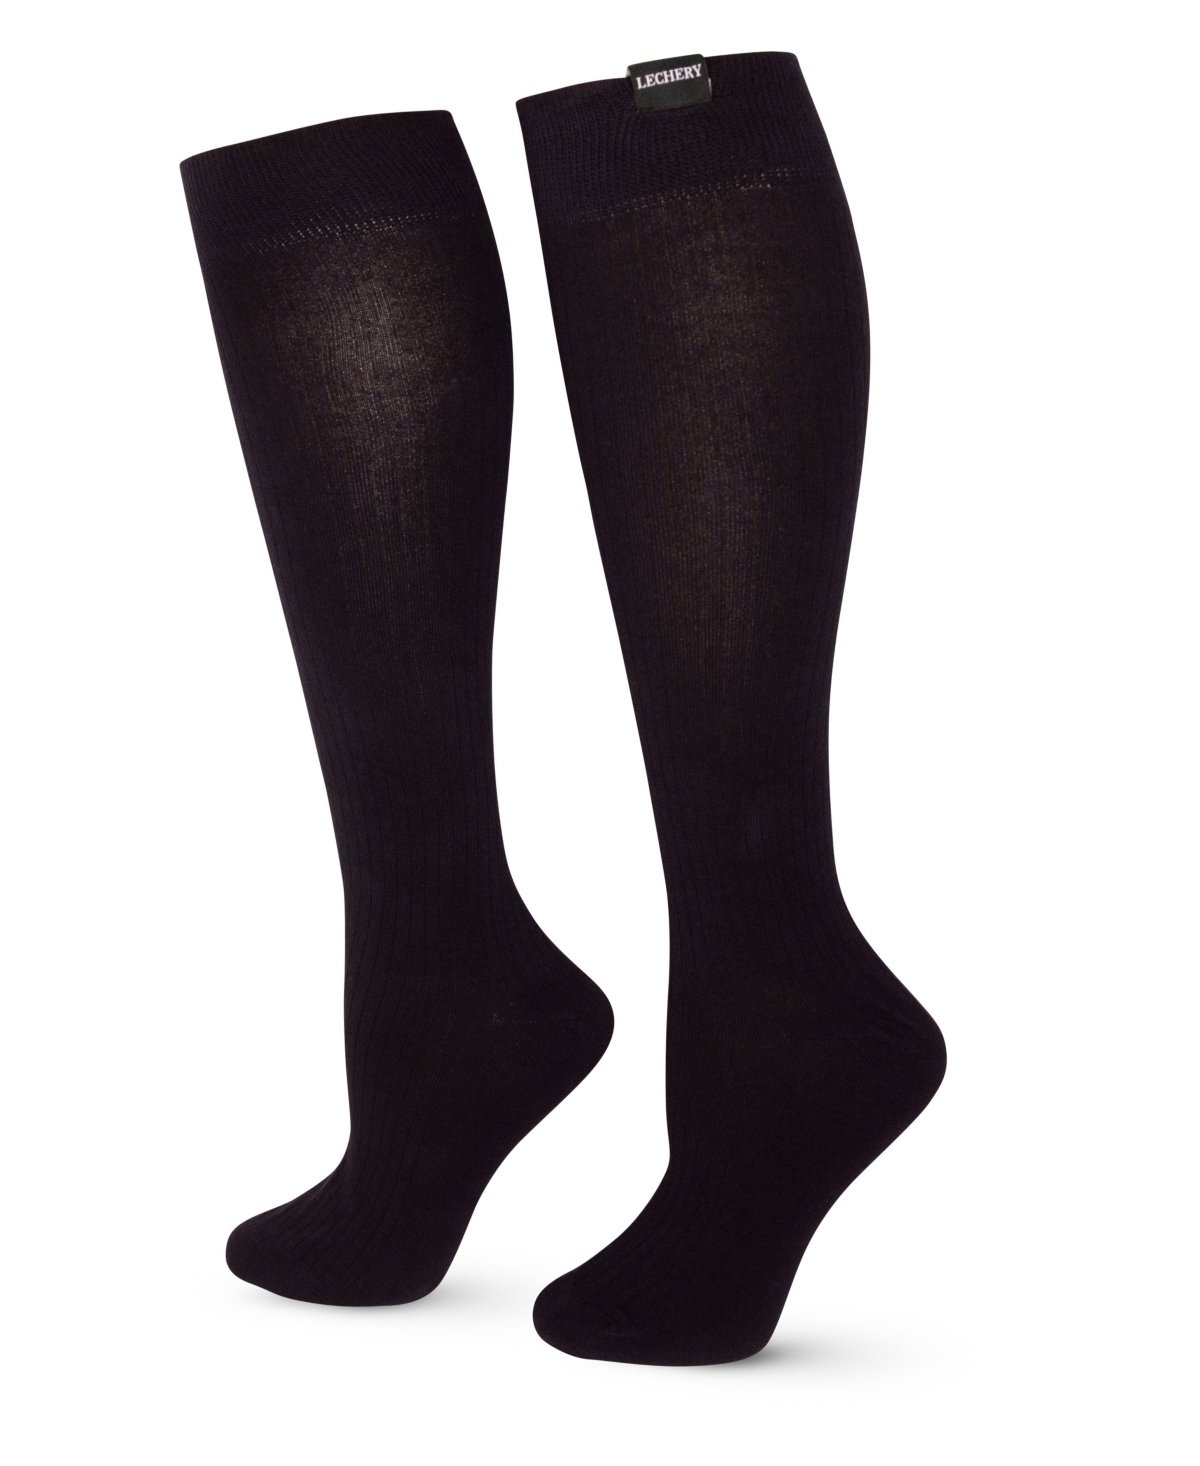 Unisex Classic Cotton Blend Woven Knee-High Socks - Black